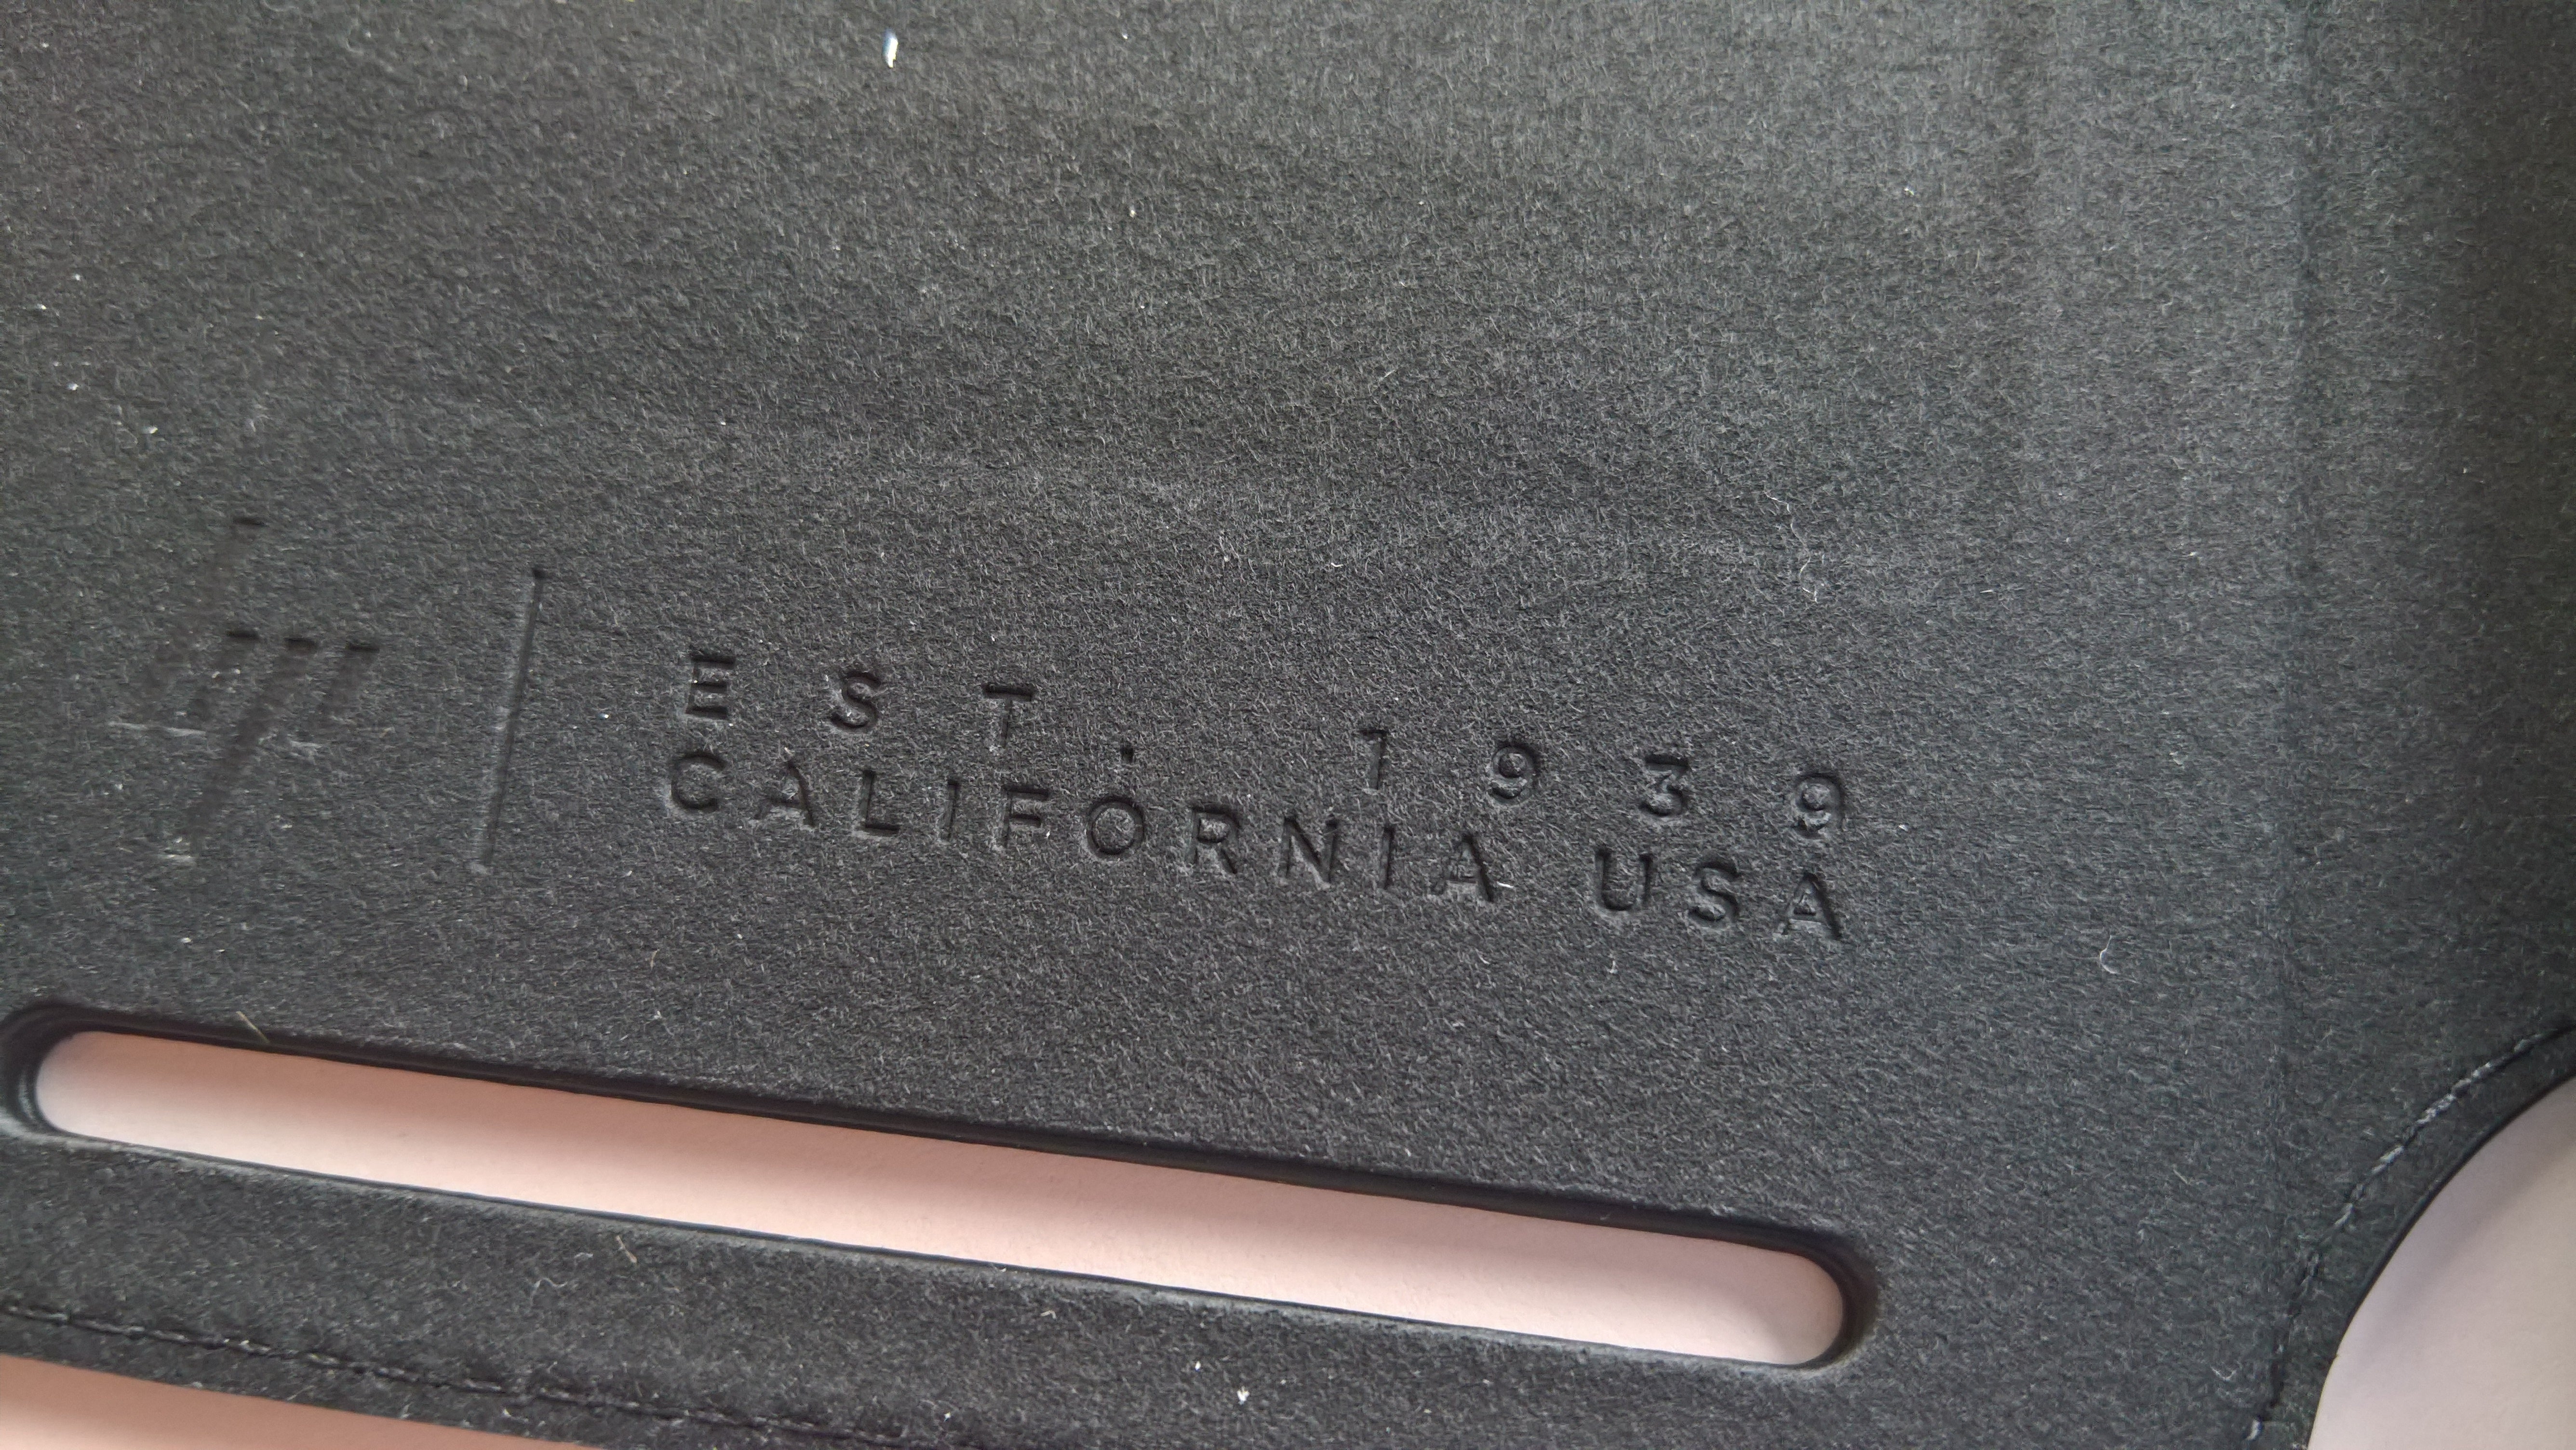 HP Elite x3 review: Yep, this was the last great Windows phone | PCWorld